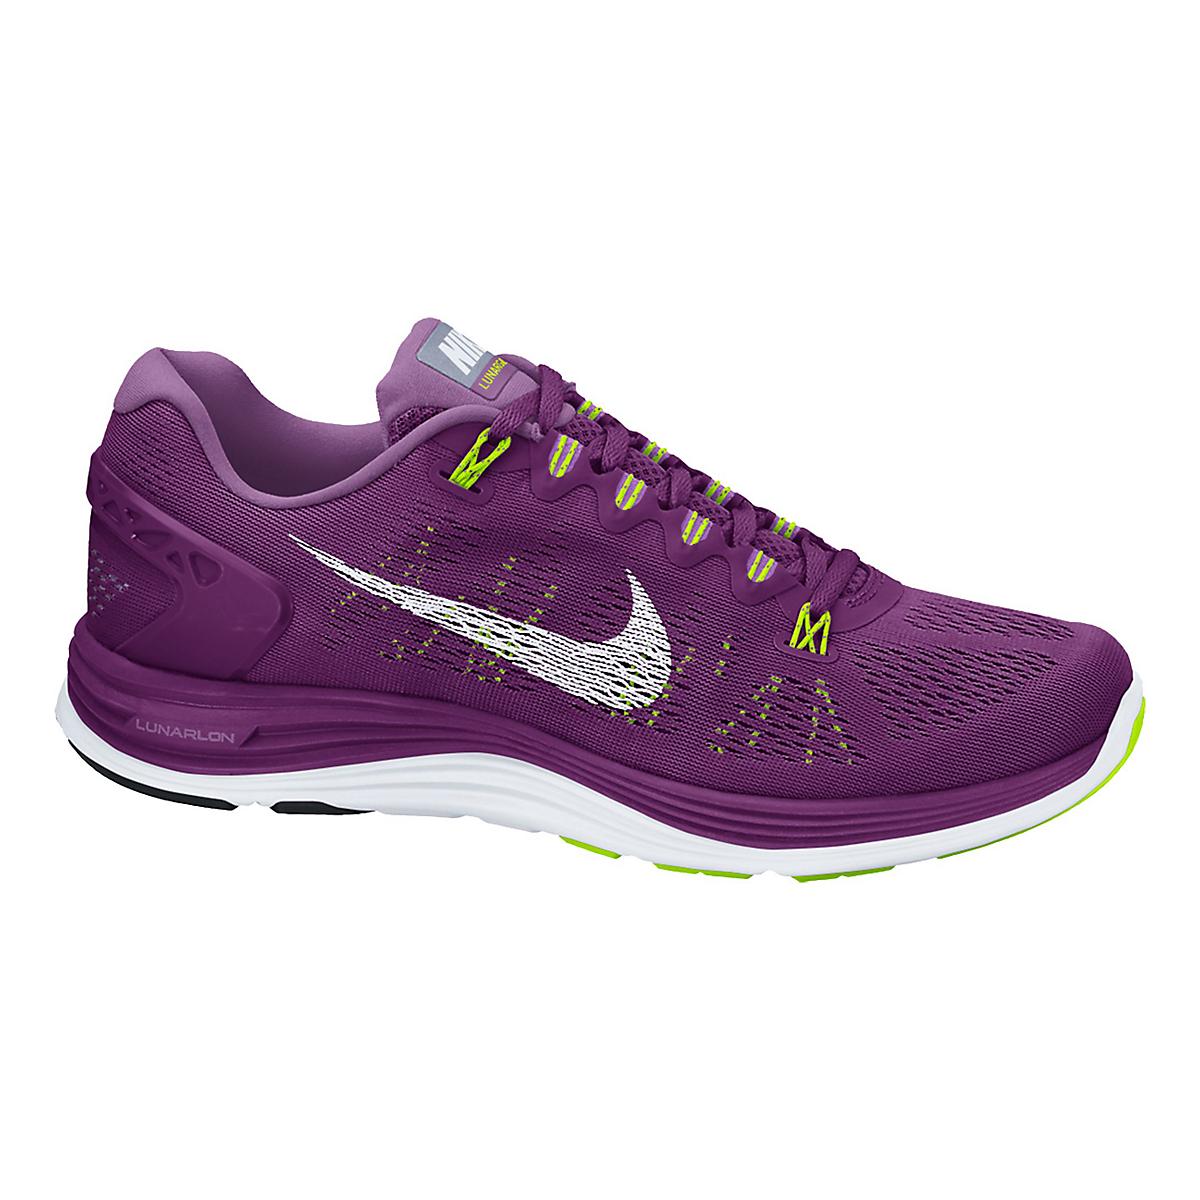 Womens Nike LunarGlide+ 5 Running Shoe at Road Runner Sports